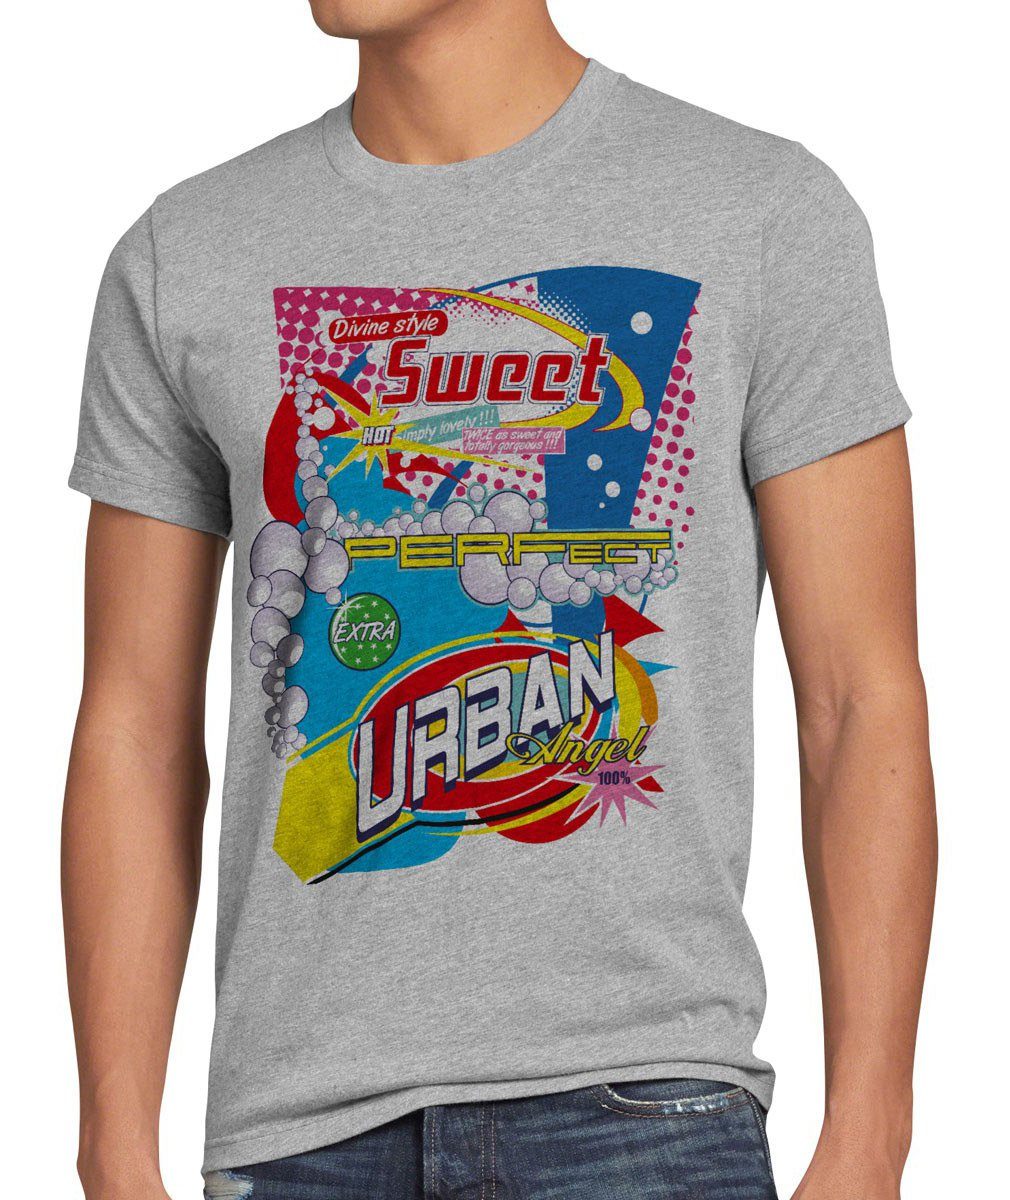 T-Shirt nein Herren retro wäsche Art werbung Print-Shirt bunt waschmittel grafik grau meliert 80er style3 Urban